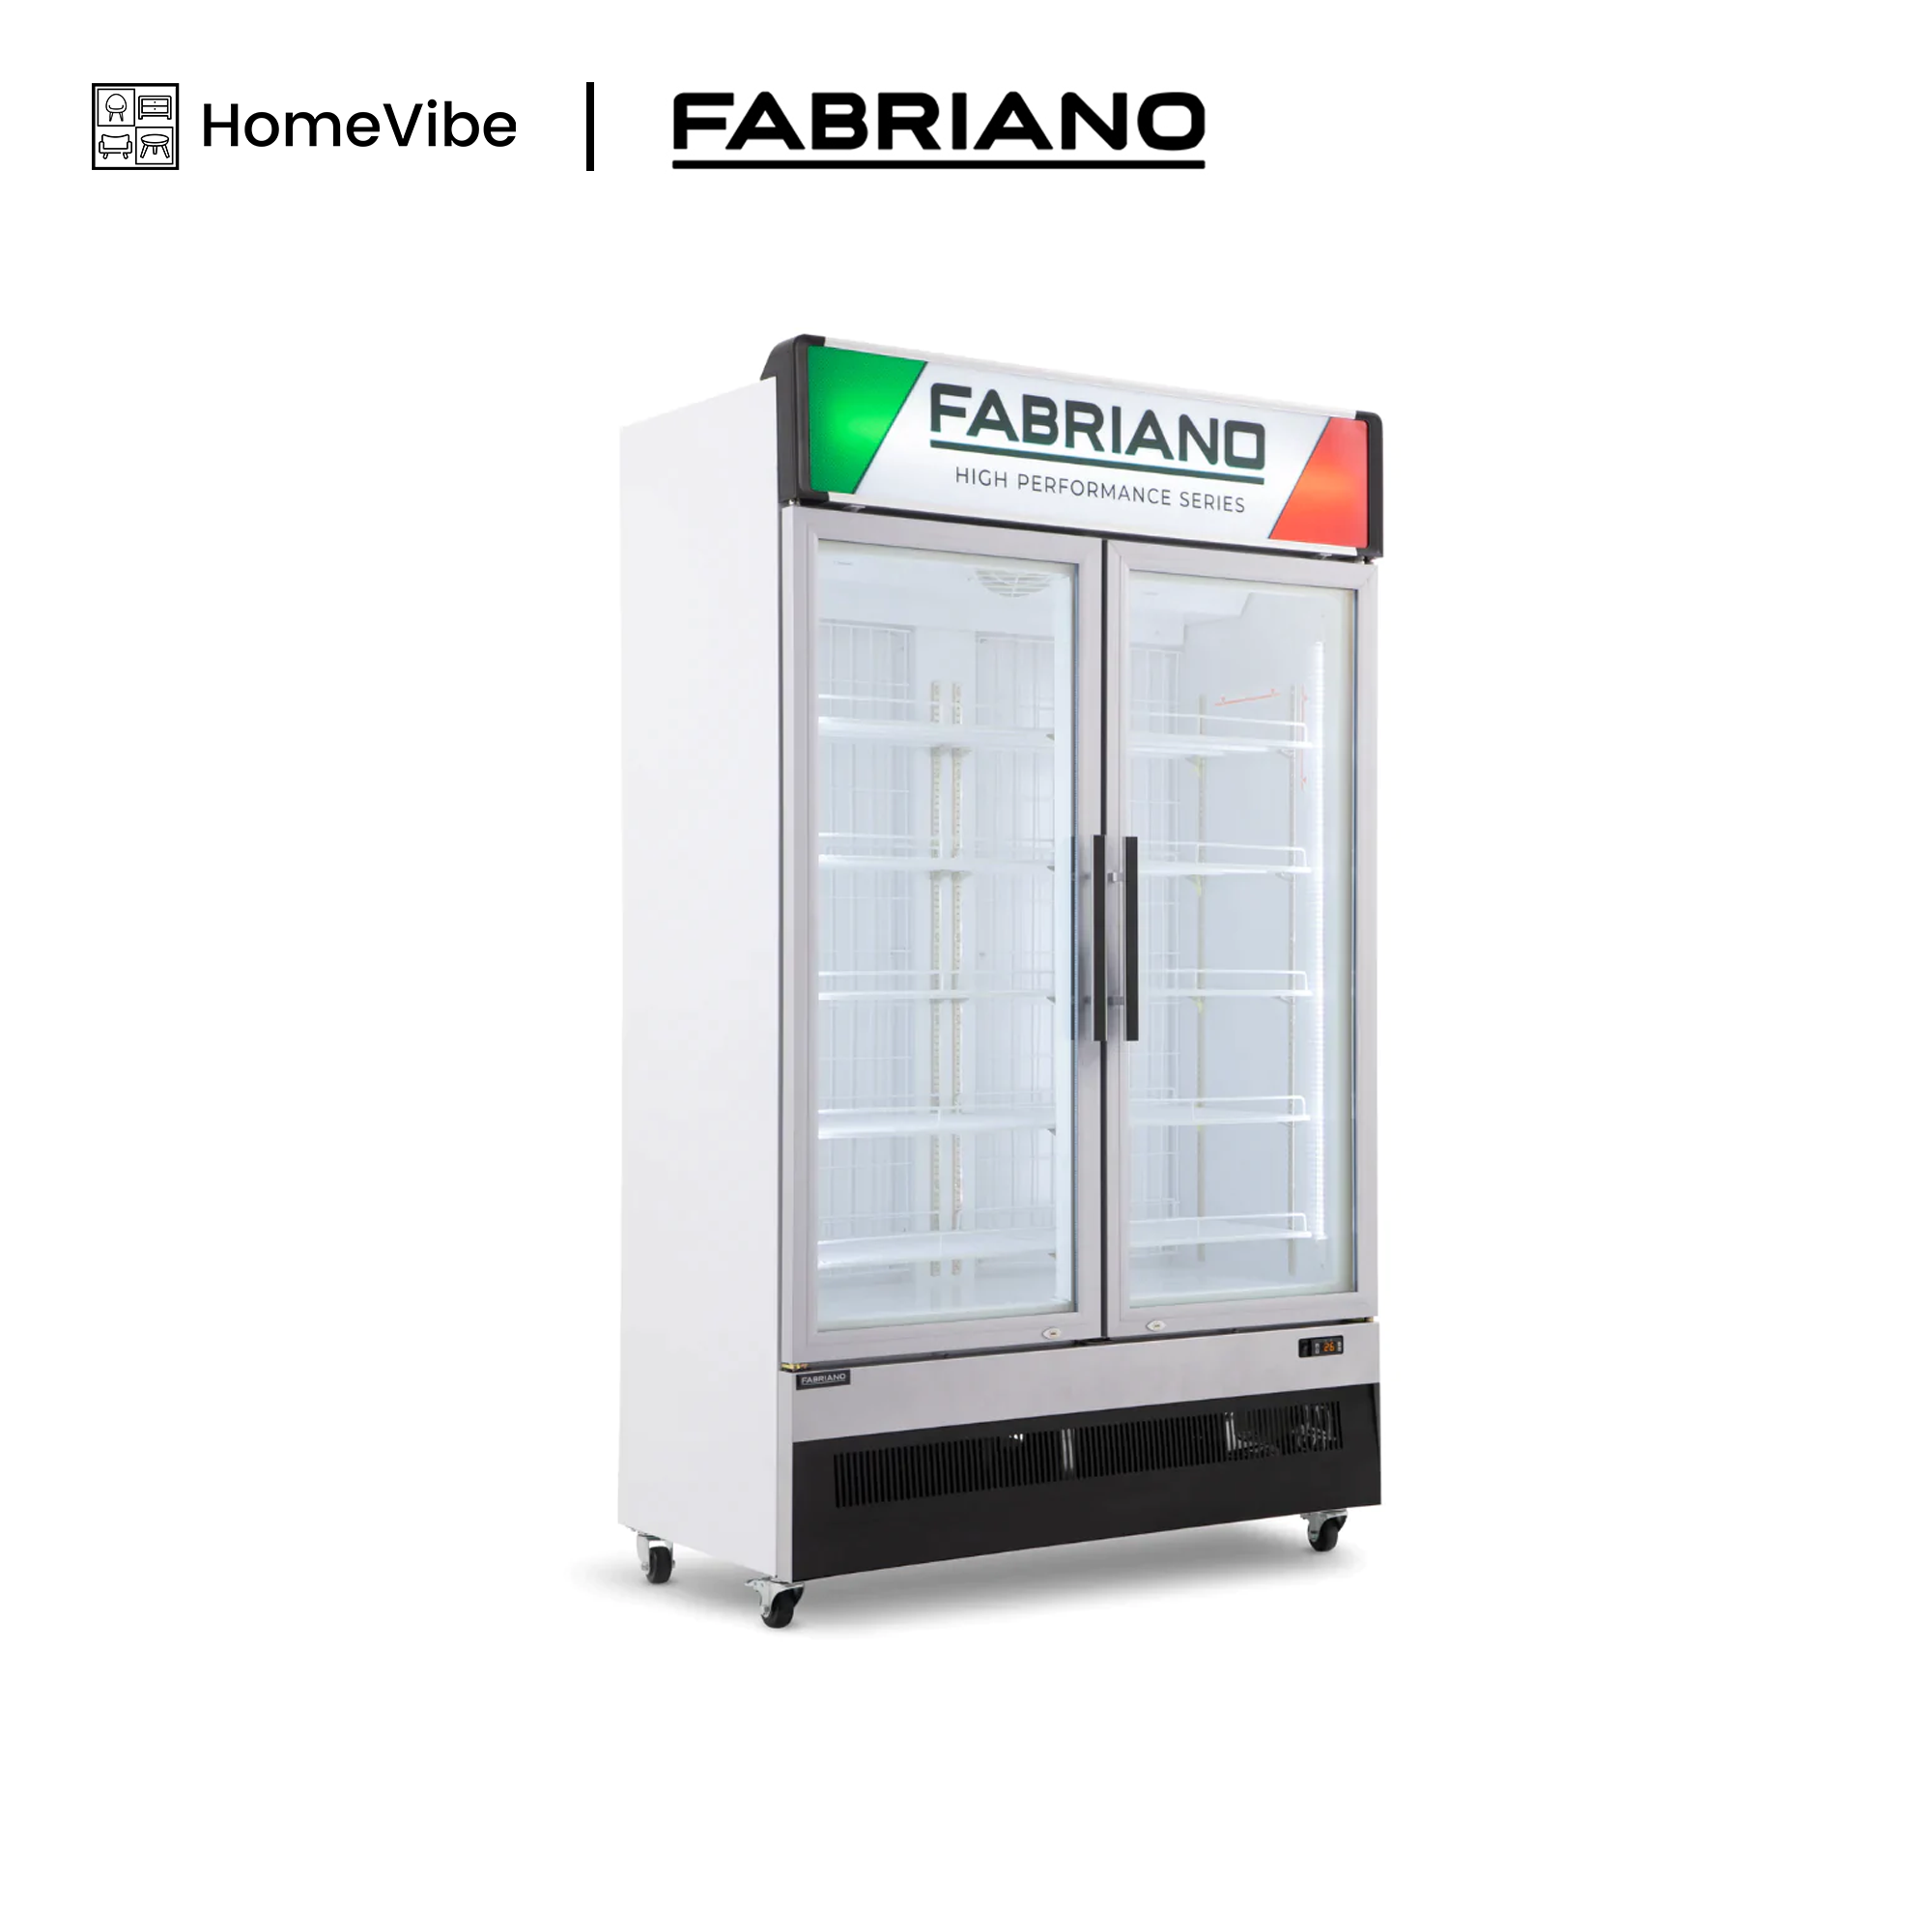 Fabriano 28cuft High Performance Showcase Freezers FSI28CSG